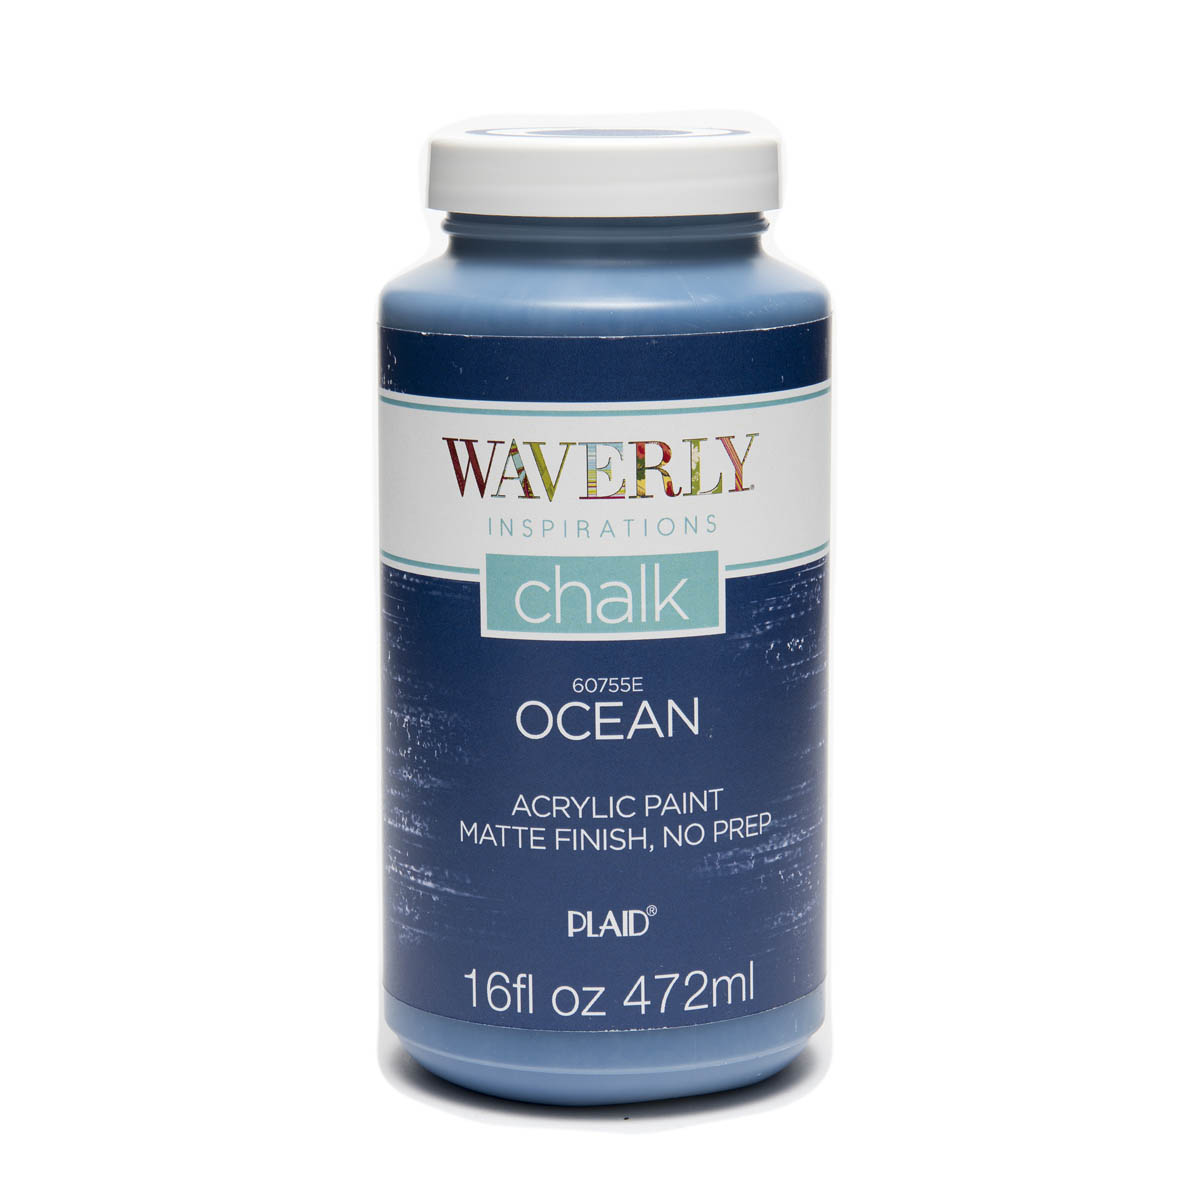 Waverly ® Inspirations Chalk Finish Acrylic Paint - Ocean, 16 oz. - 60755E